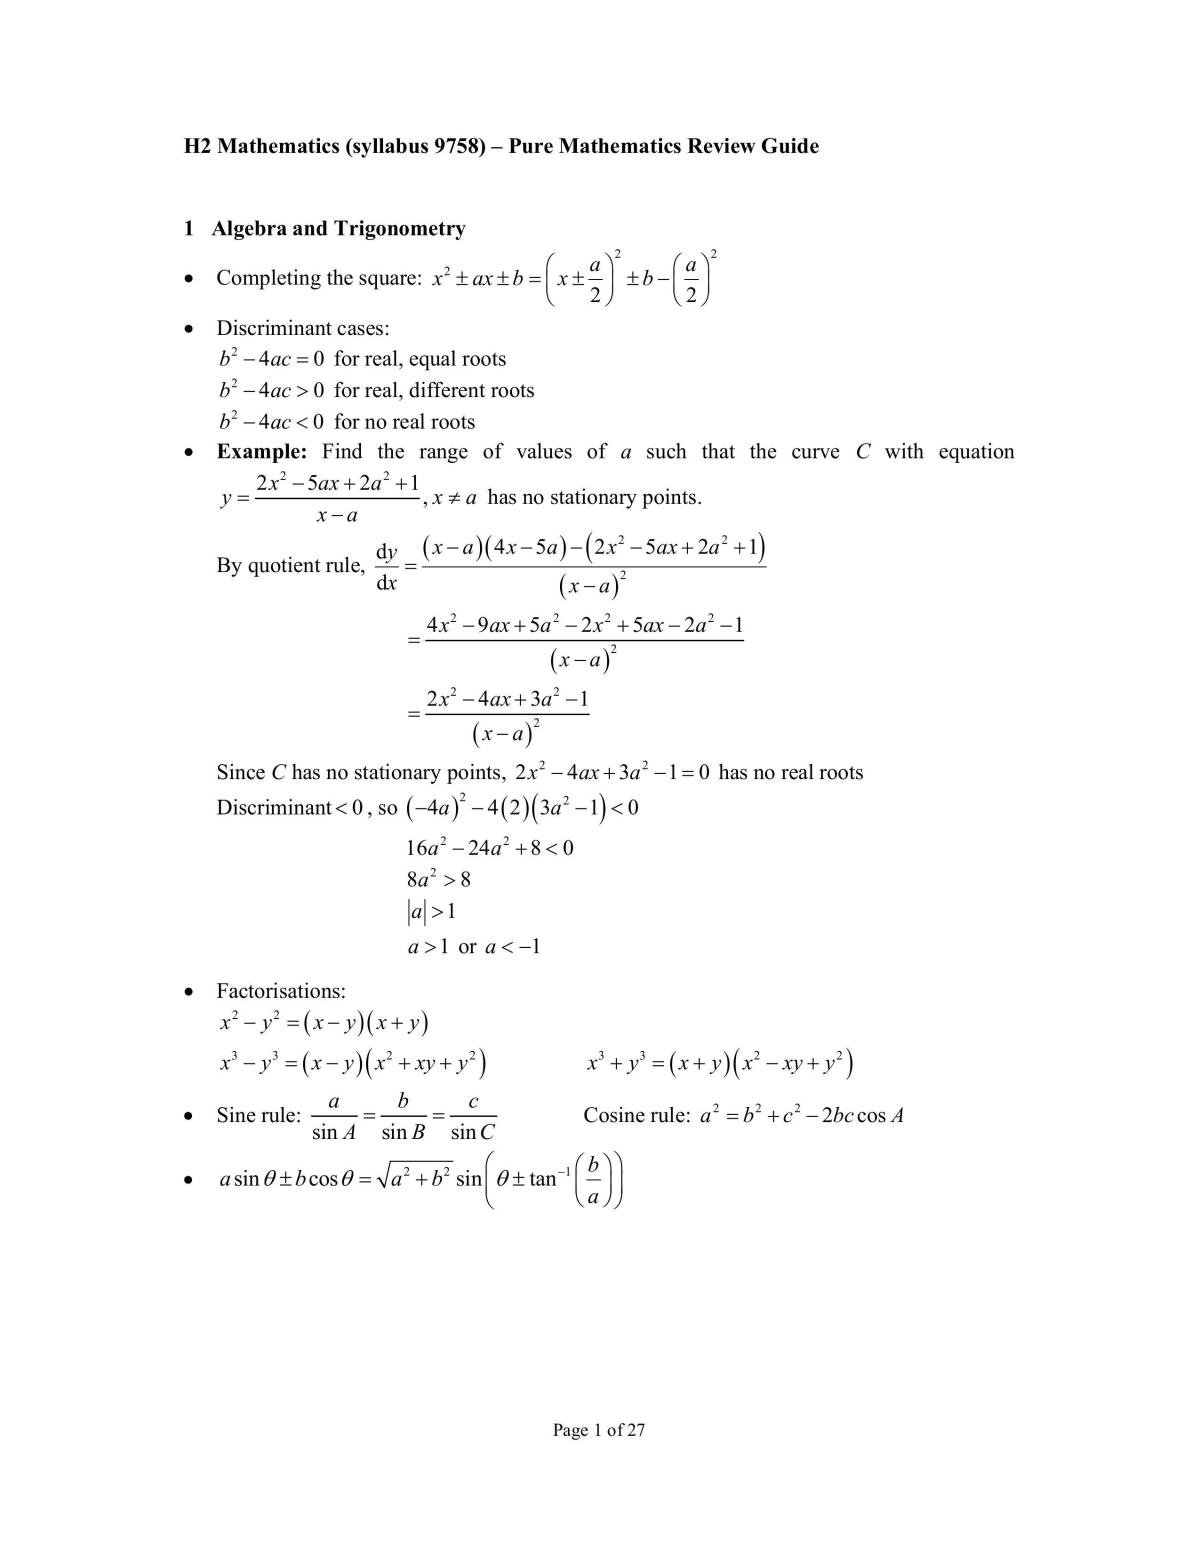 H2 Mathematics Guide - Page 1